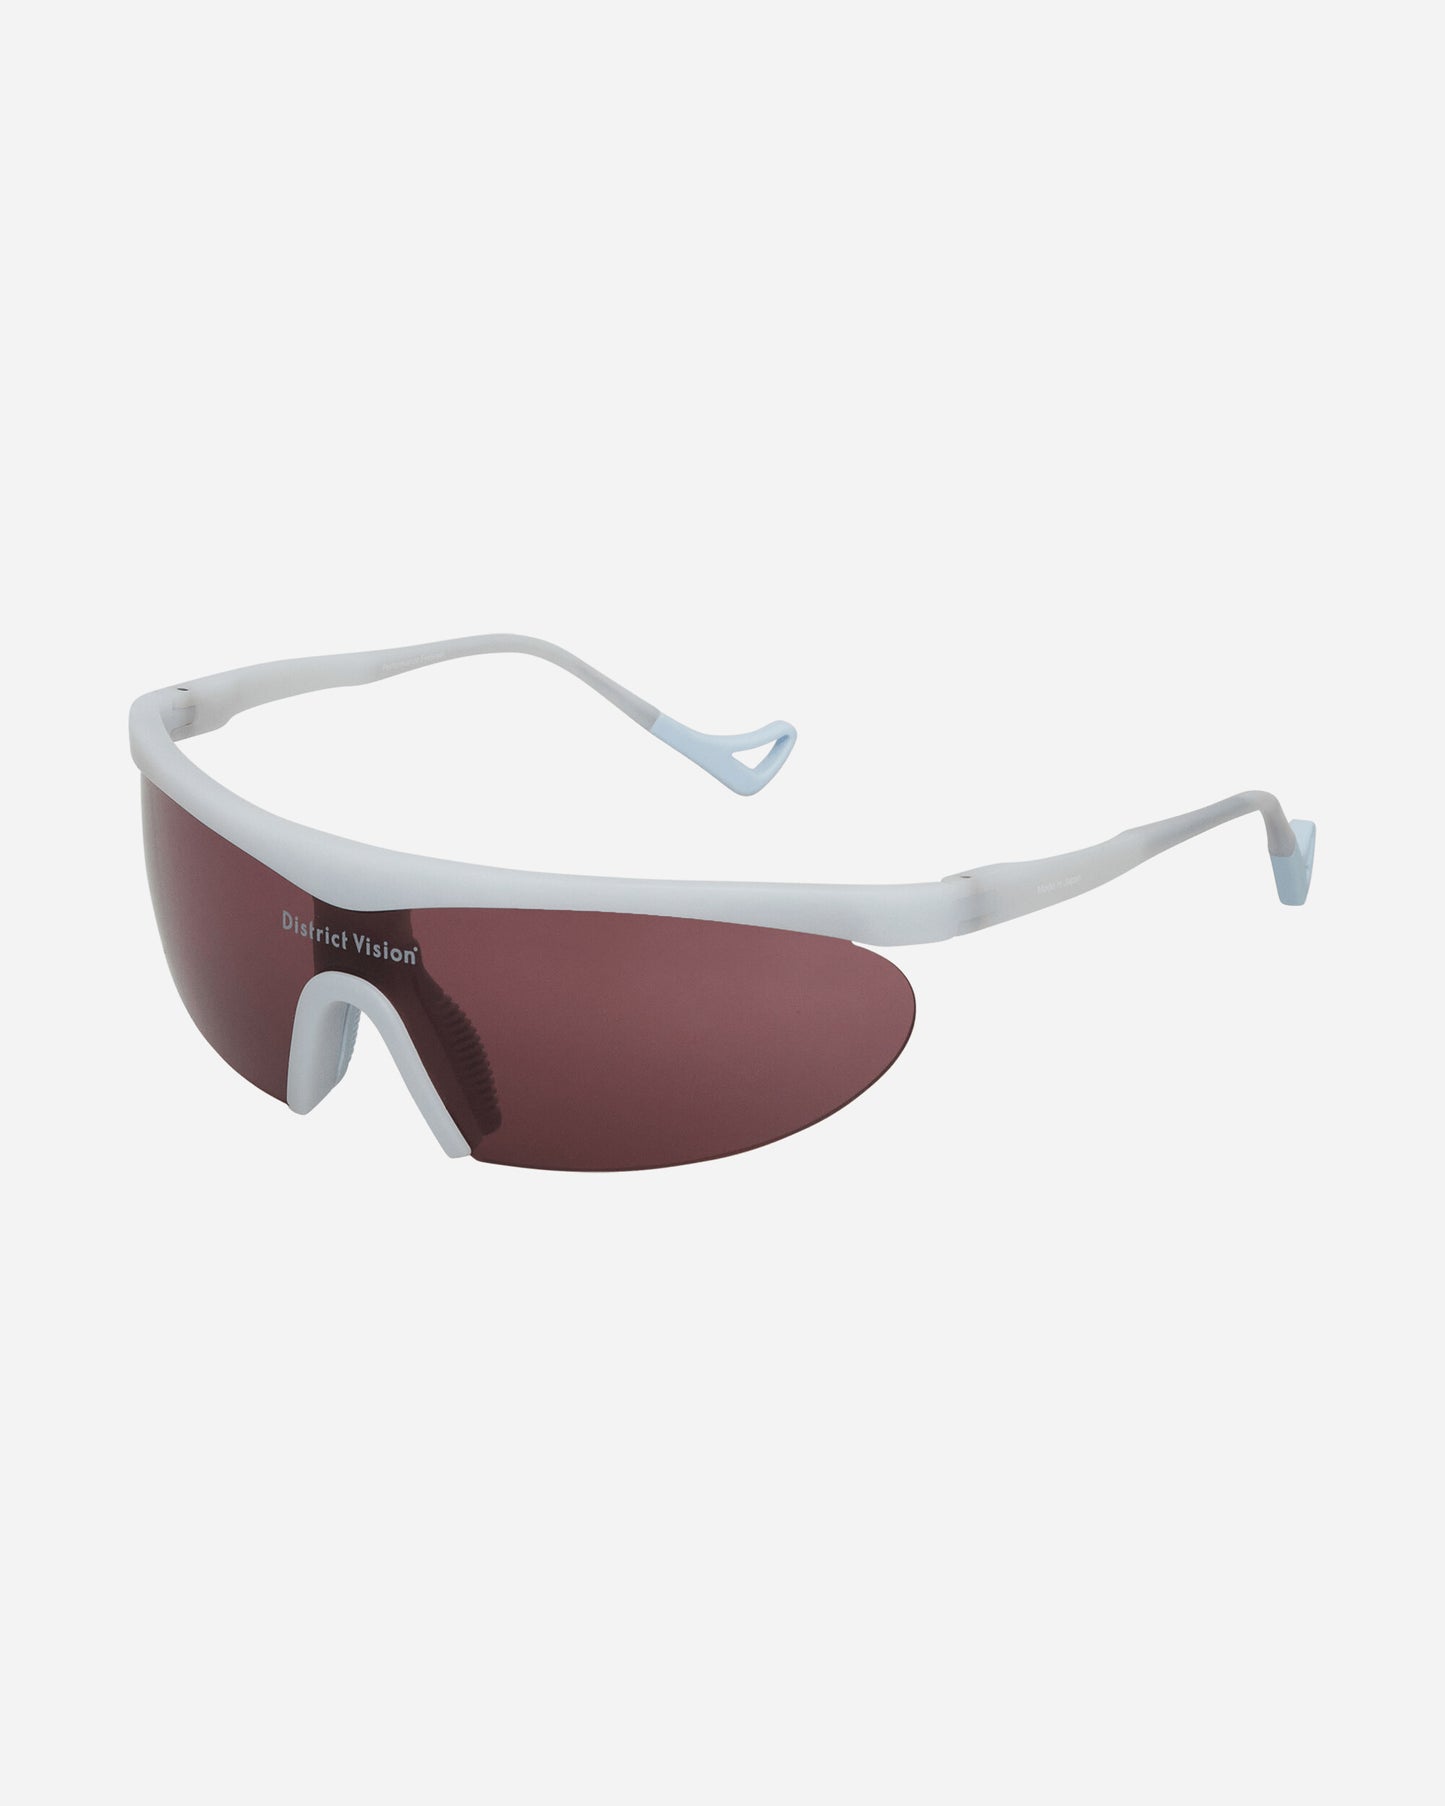 District Vision Koharu Eclipse Arctic Blue/D+ Black Rose Eyewear Sunglasses DVG005 ABBR